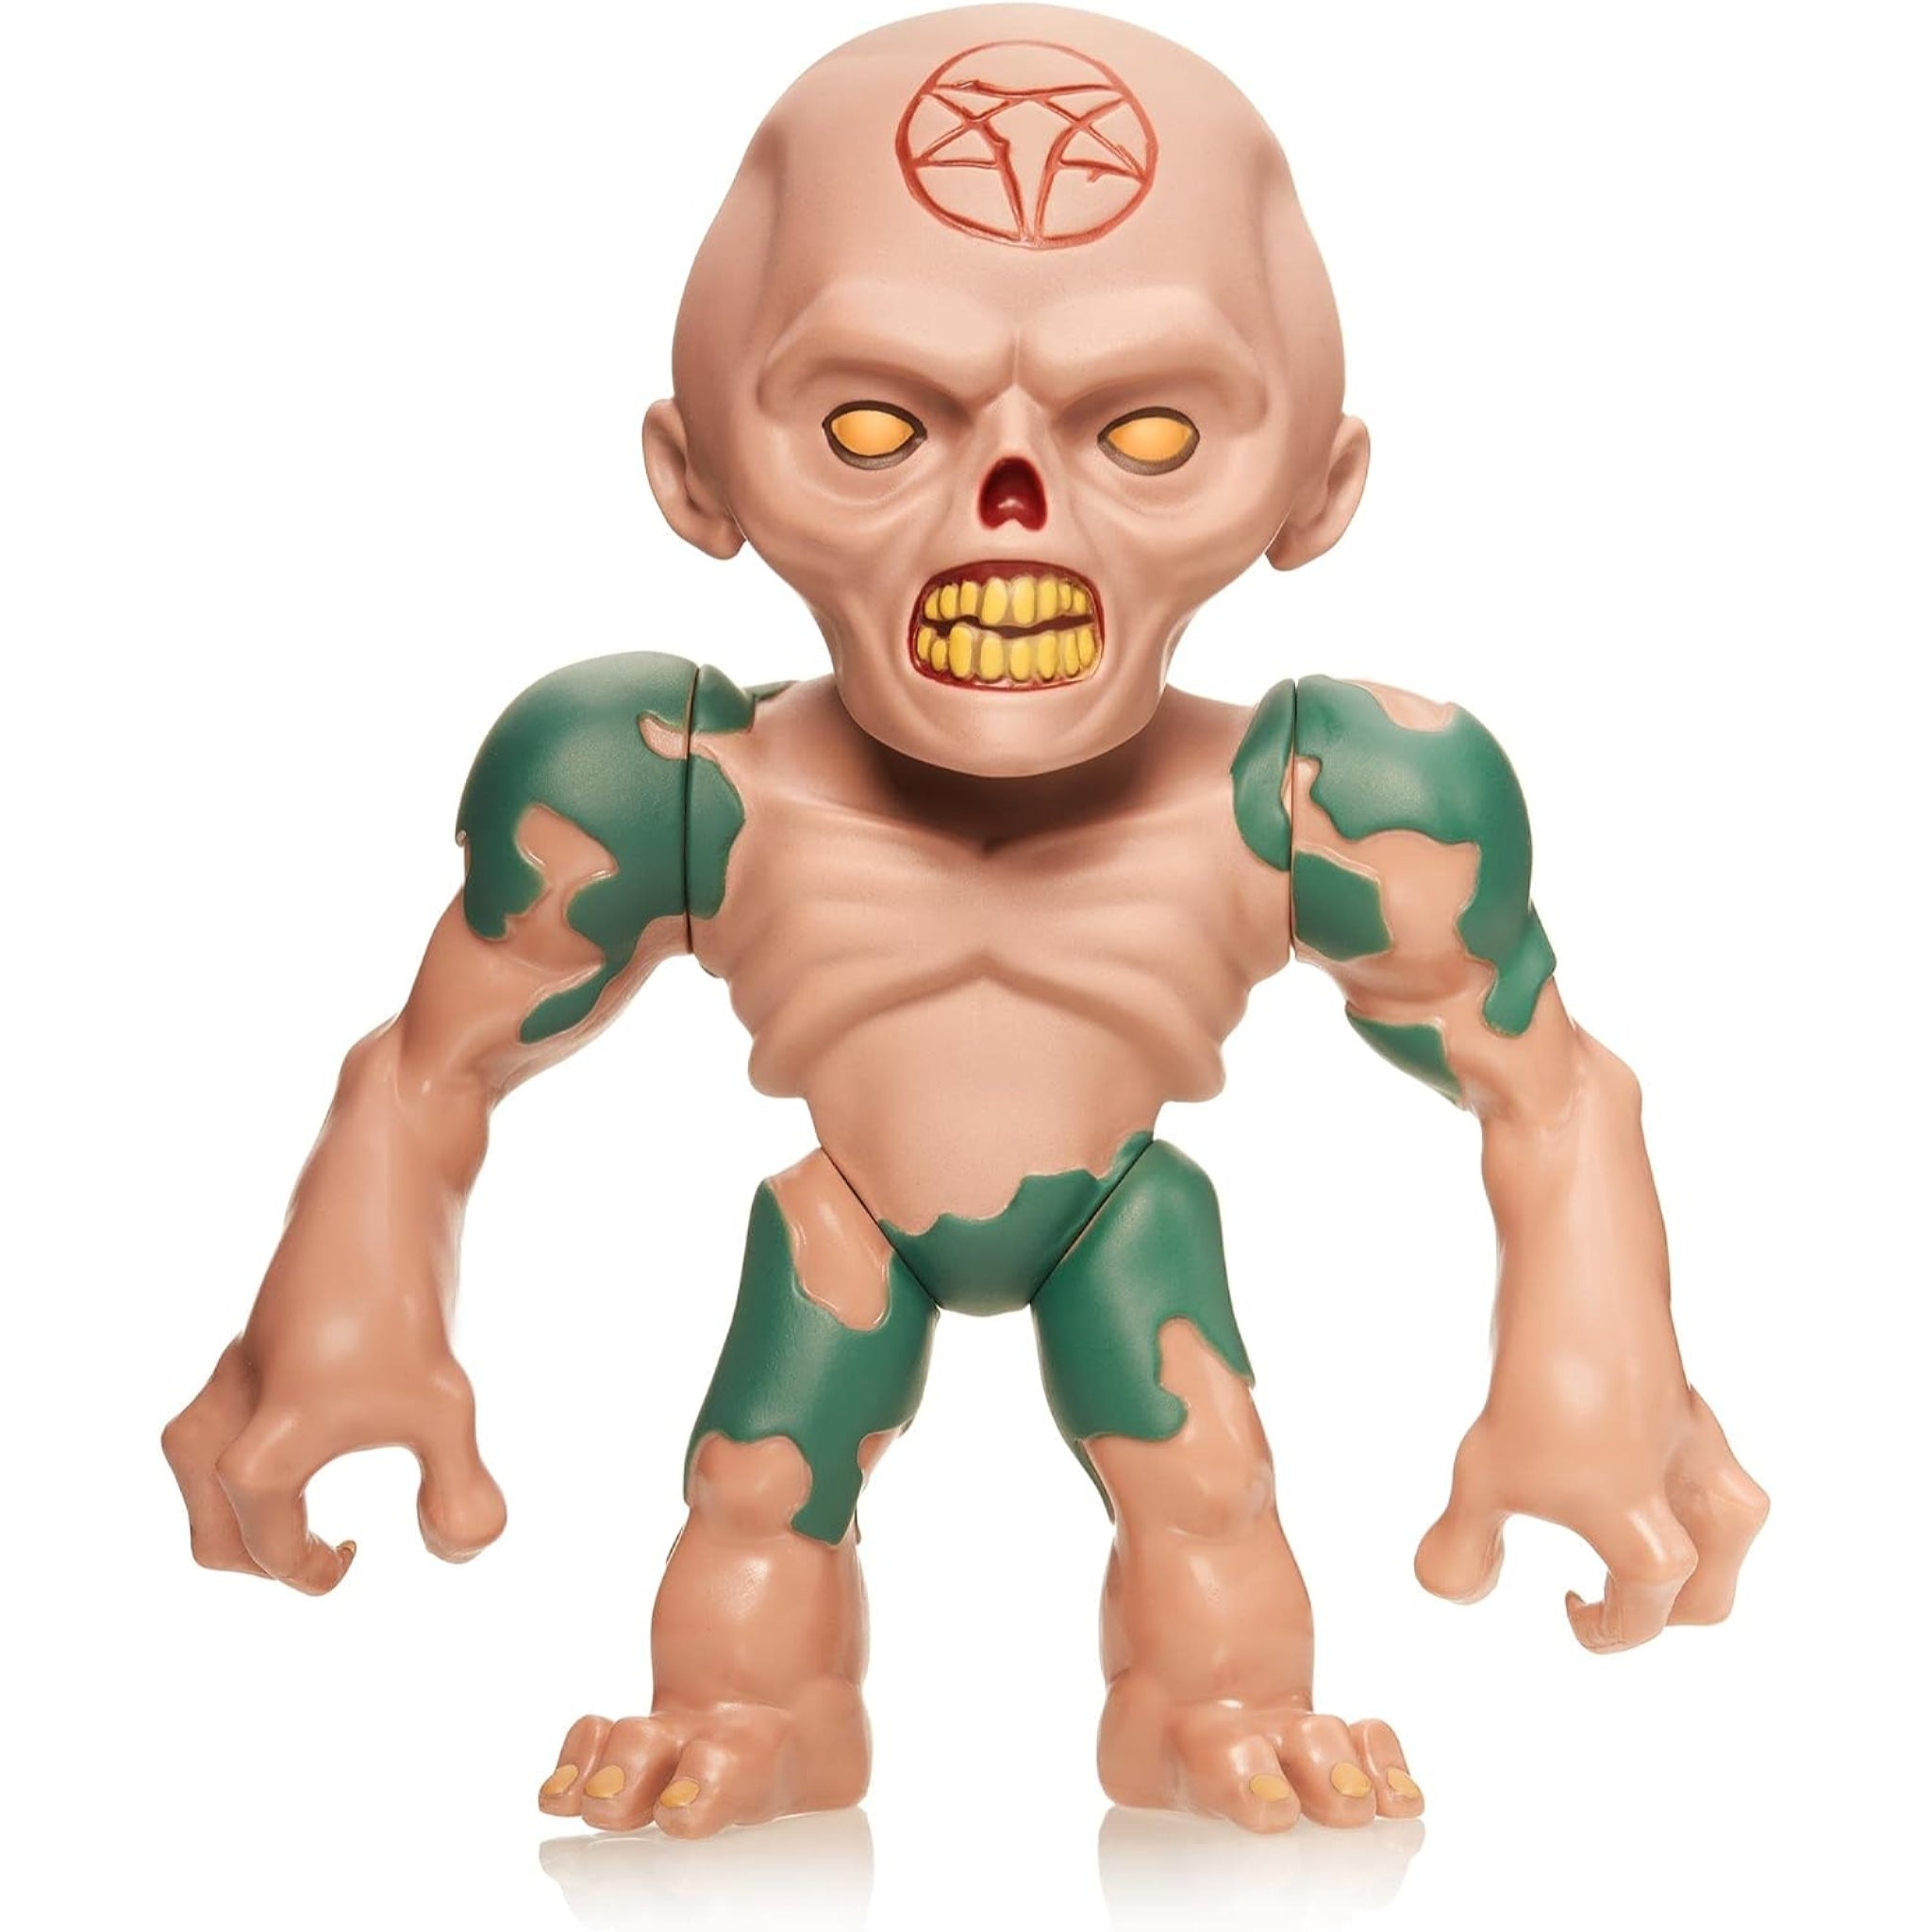 Numskull Official DOOM® Zombie Collectible Figurine